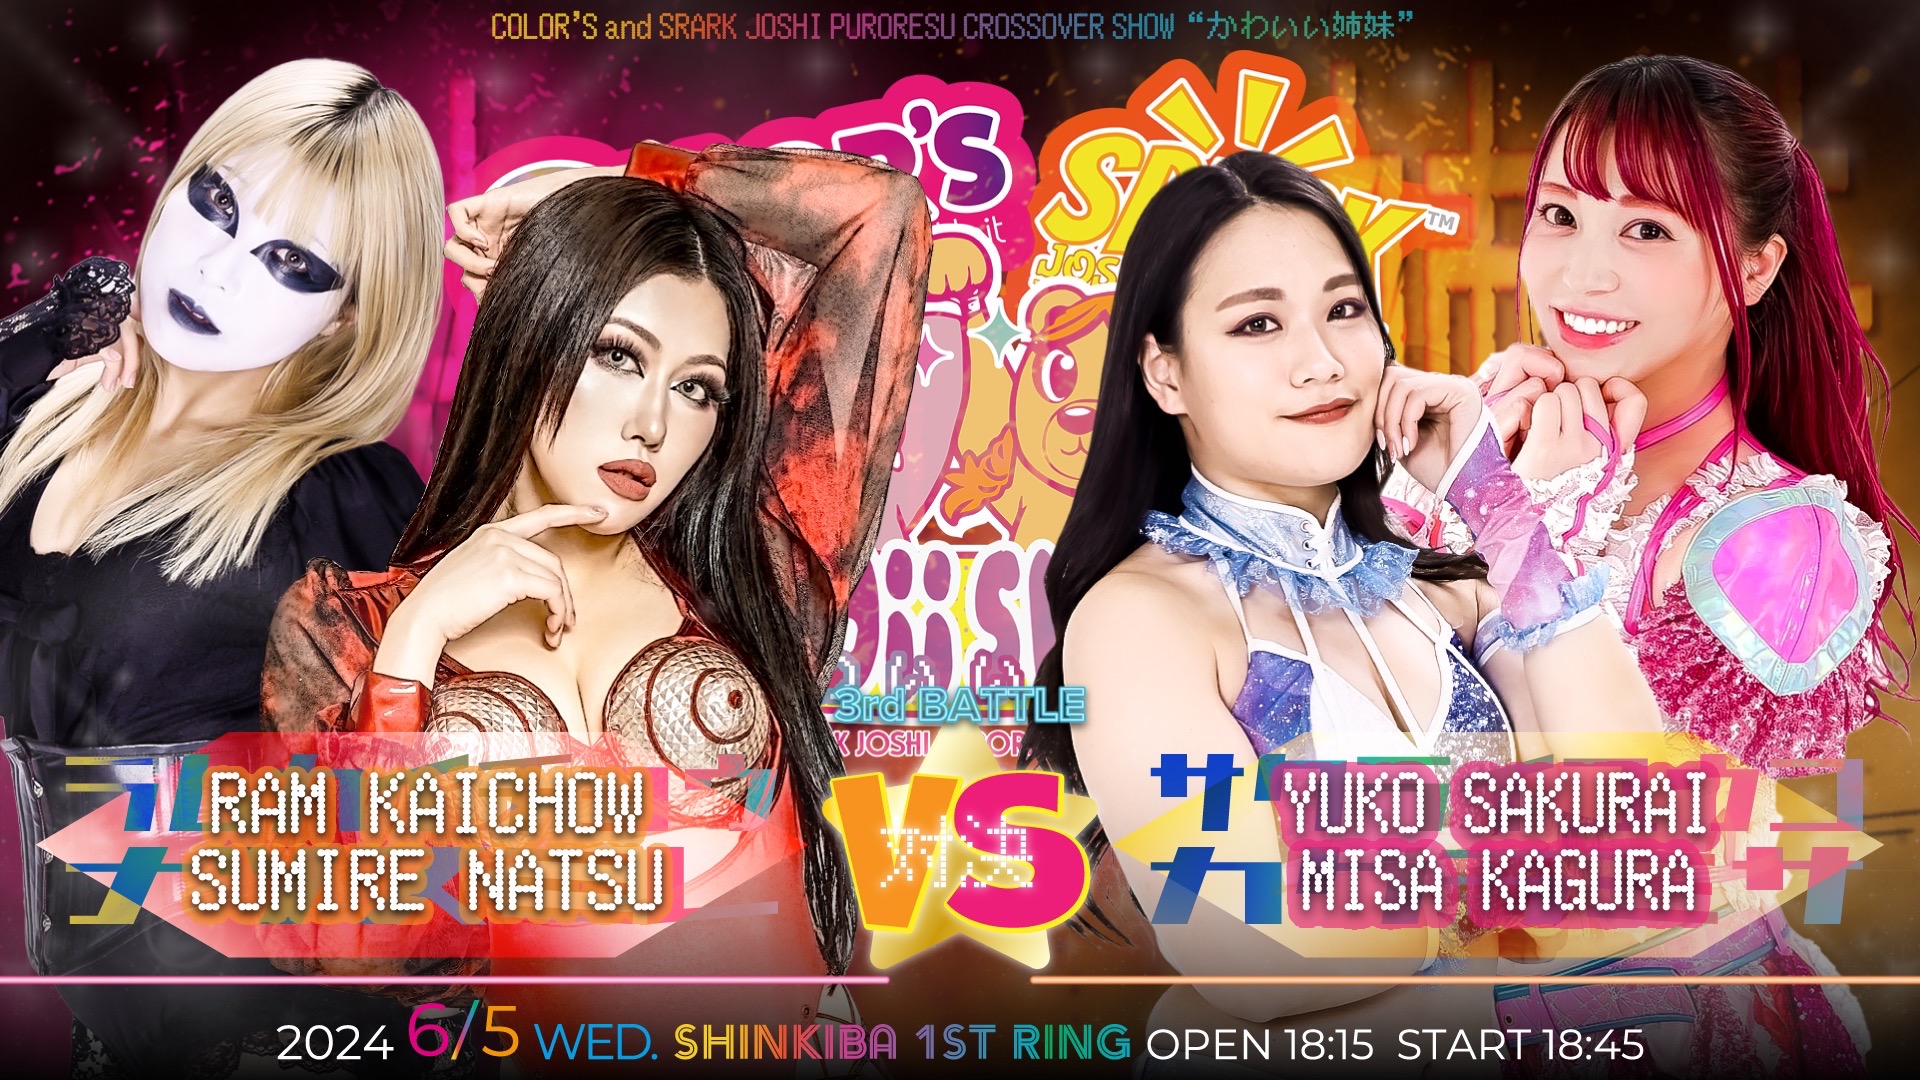 Ram Kaichow and Sumire Natsu vs Yuko Sakurai and Misa Kagura at COLORS x Spark Joshi